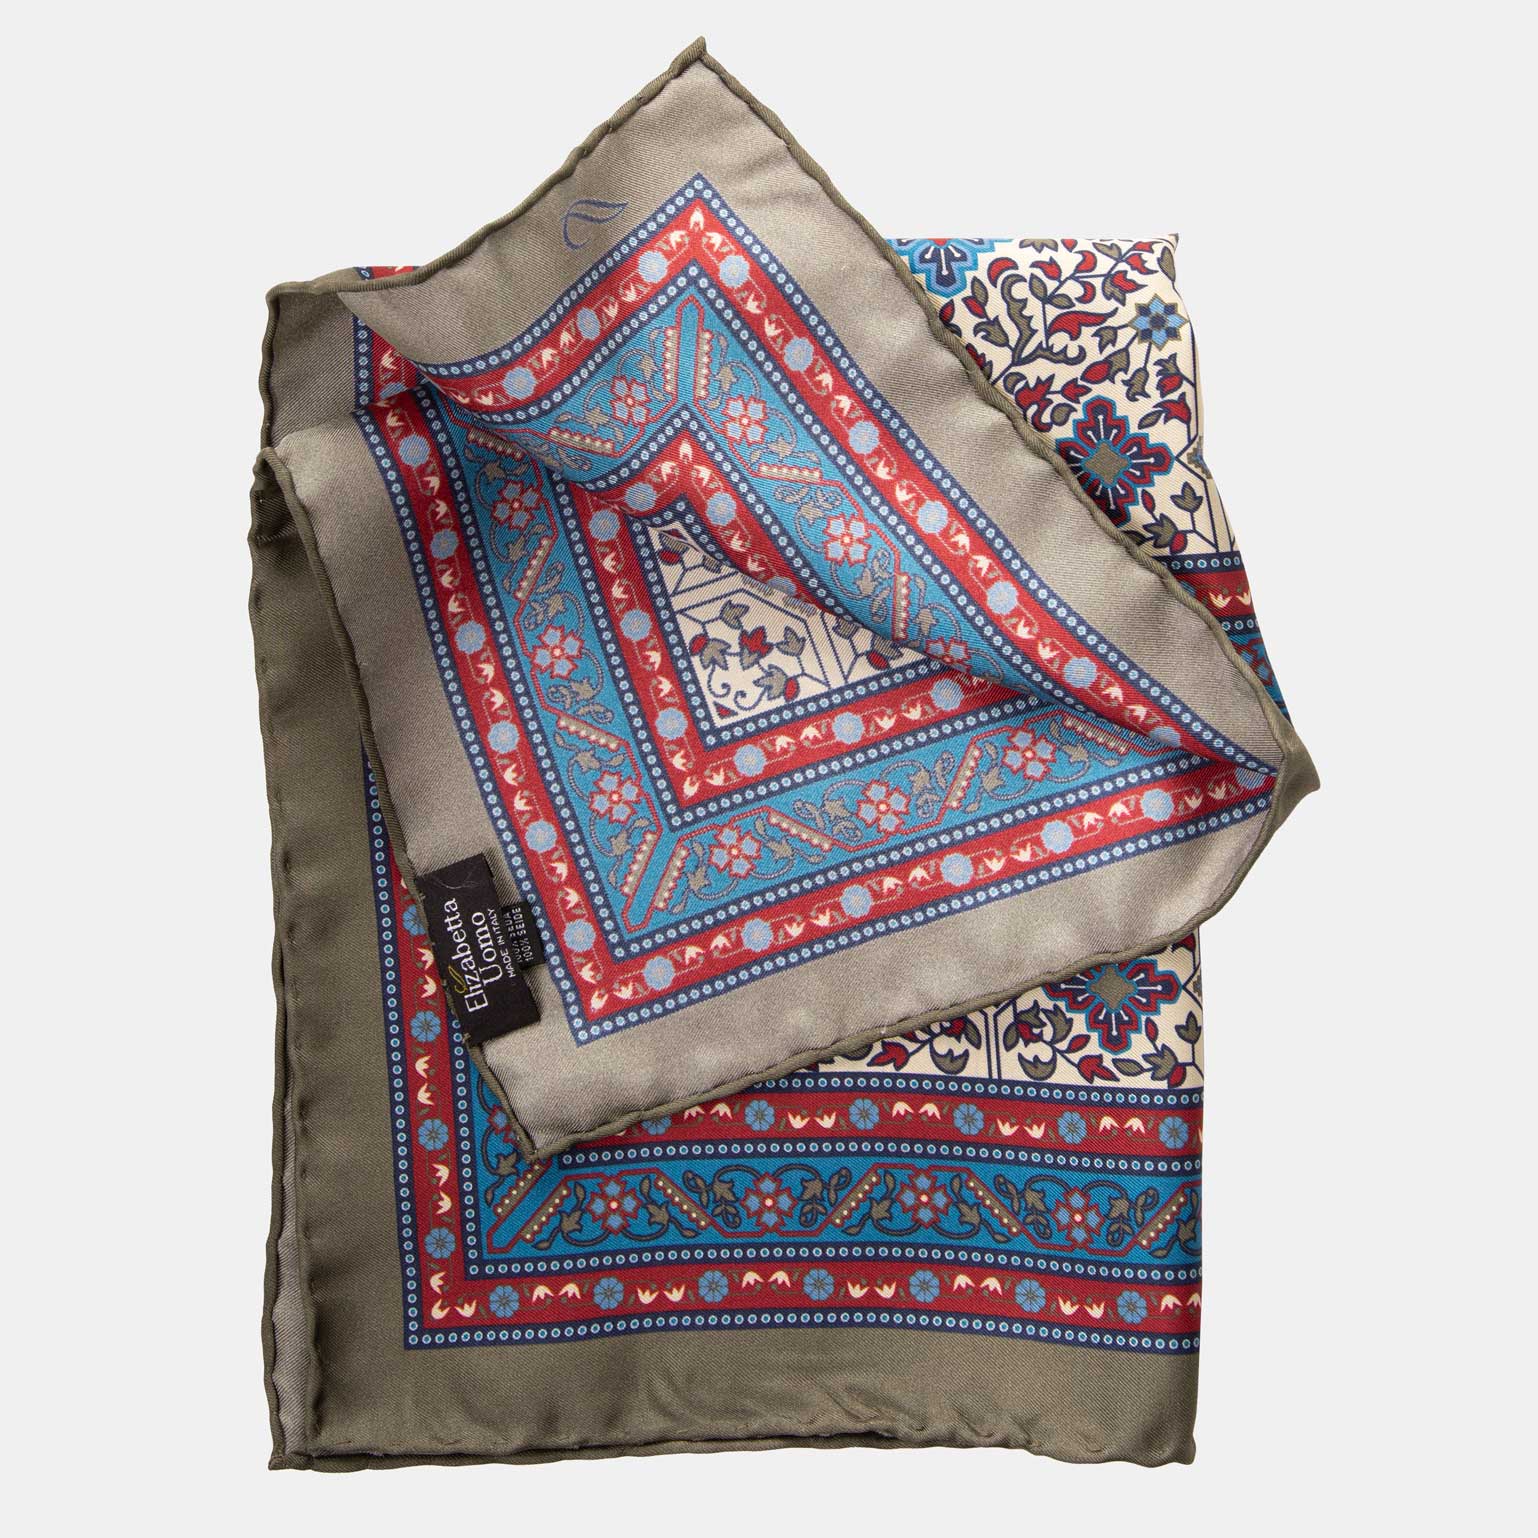 Brown Black Mens Pocket Square - Premium Silk Handkerchiefs for Suits –  Amedeo Exclusive